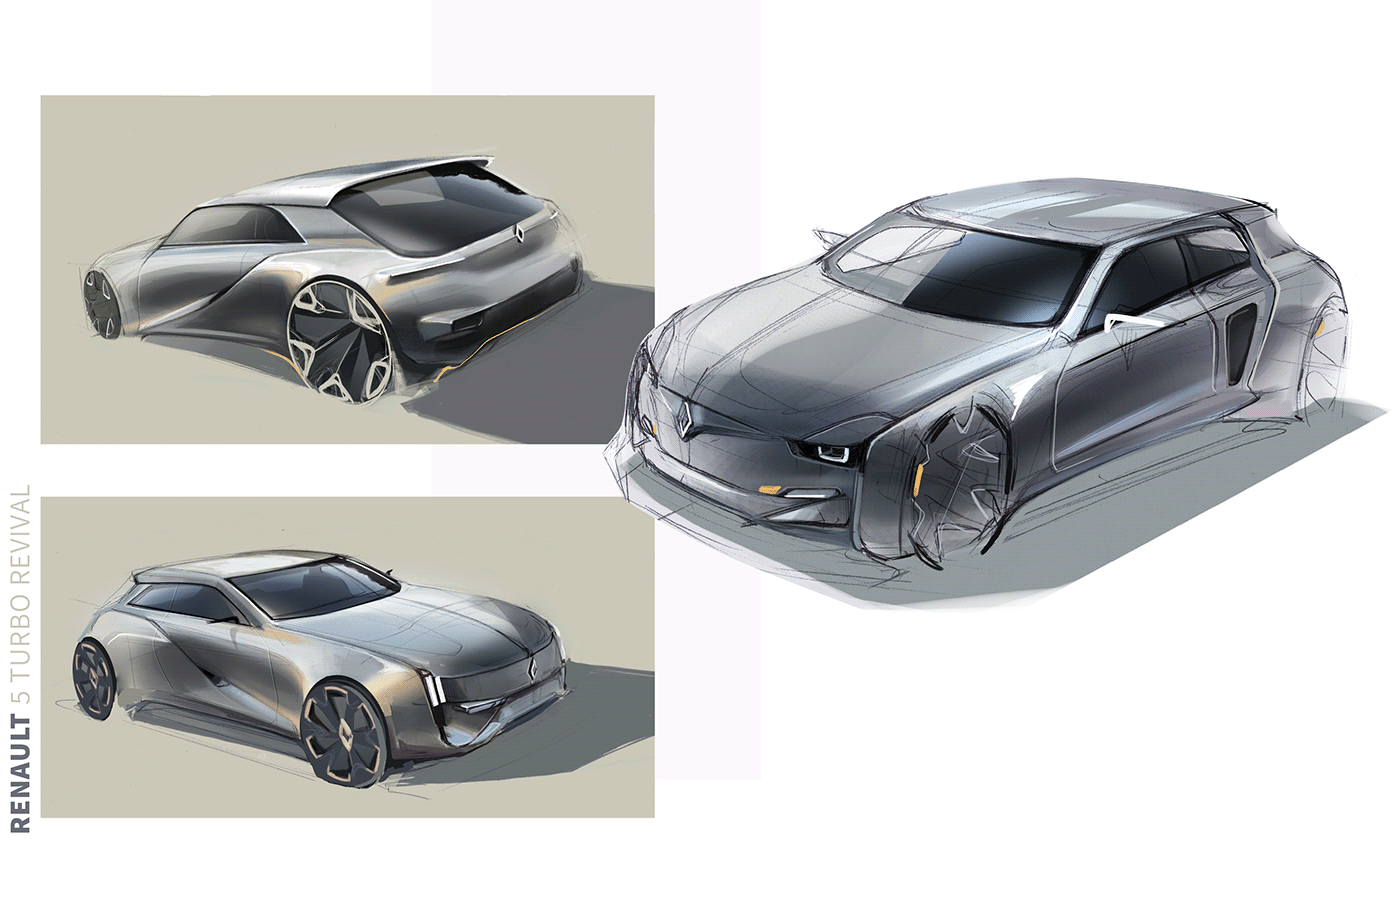 Audi BMW cardesign Cars carsketch Pforzheim Porsche renault sketches Transportation Design